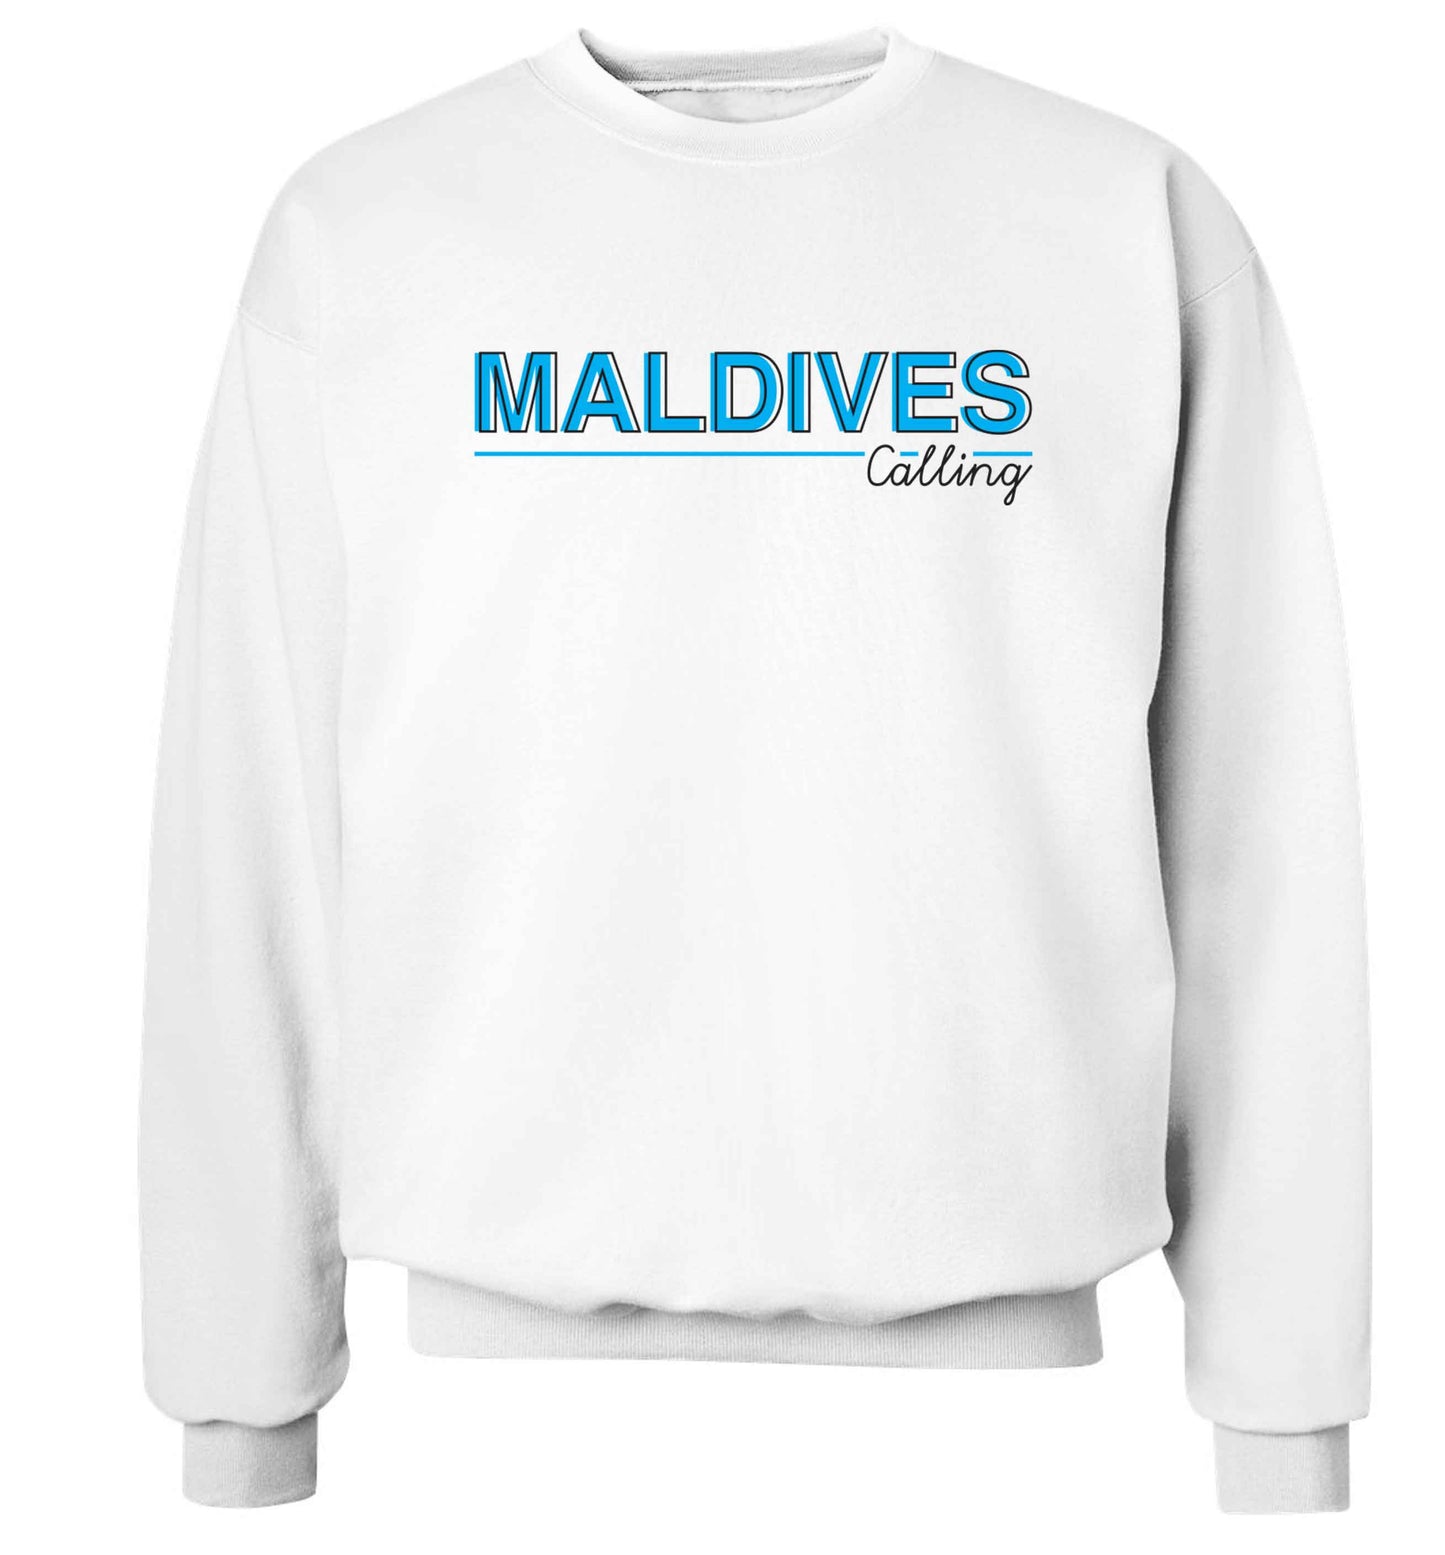 Maldives calling Adult's unisex white Sweater 2XL